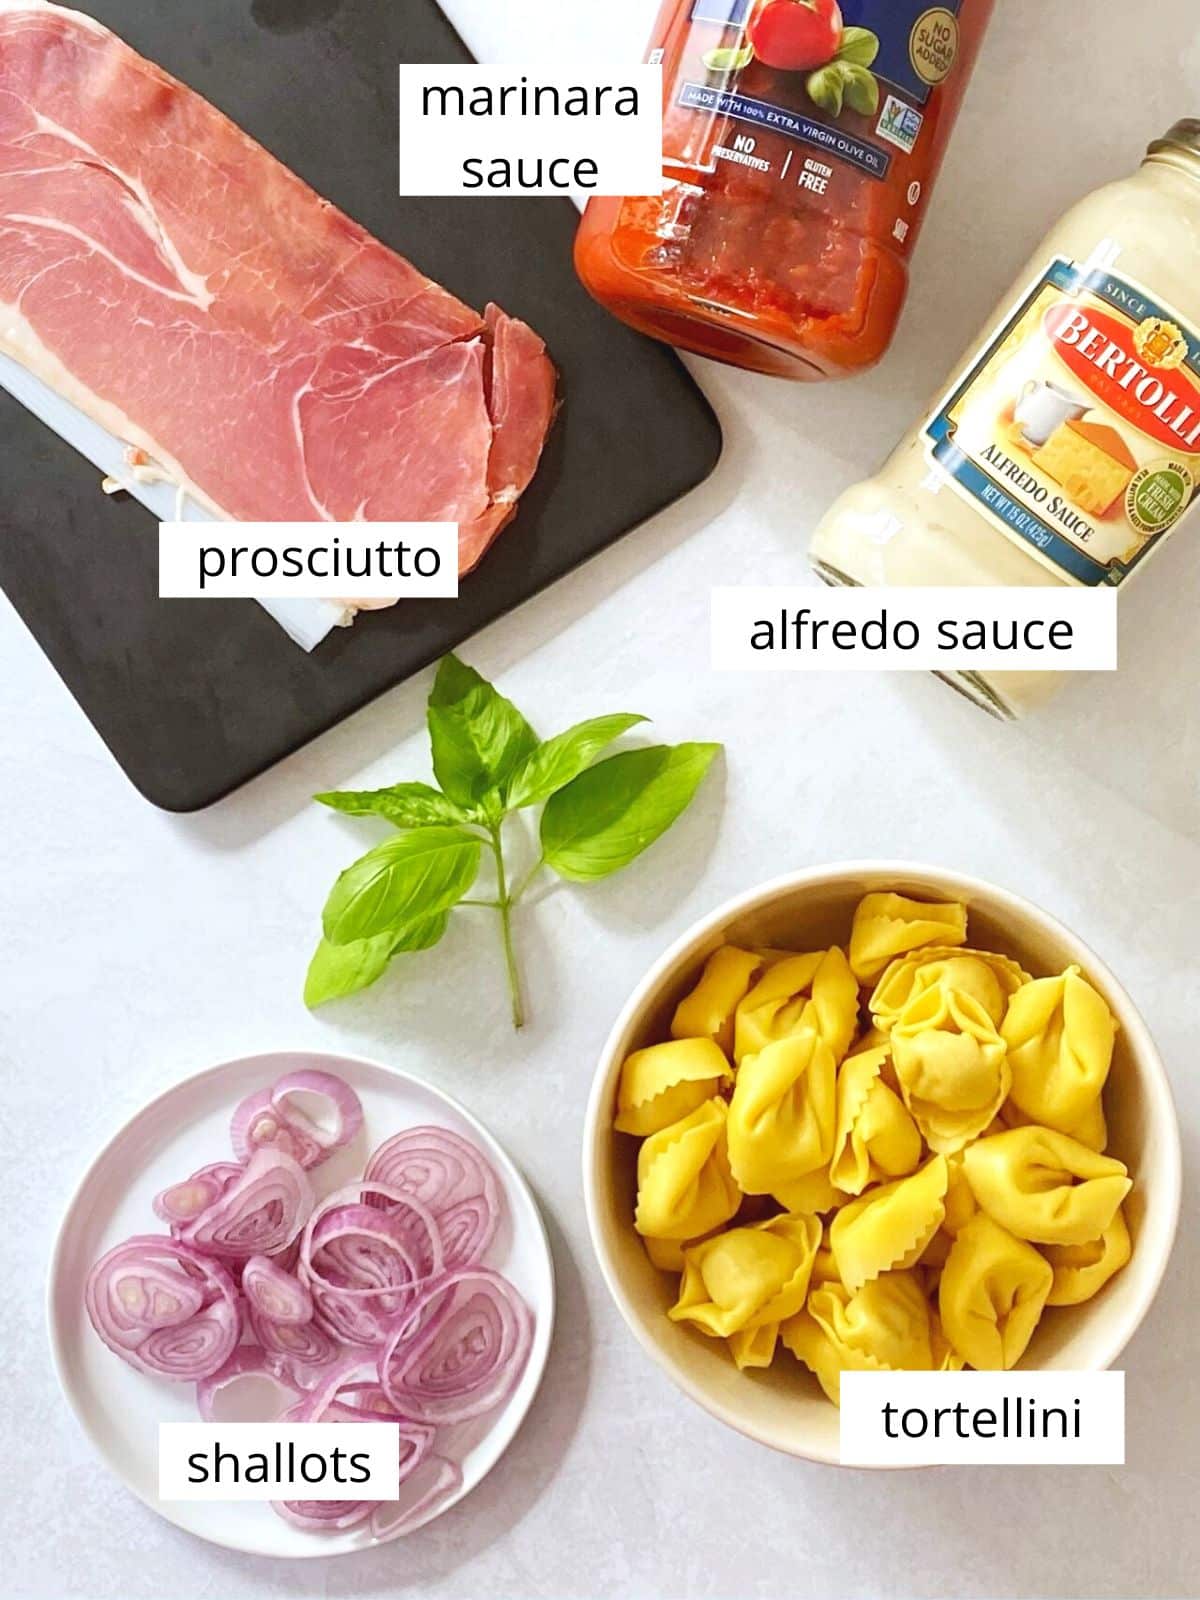 ingredients for tortellini pasta in pink sauce.